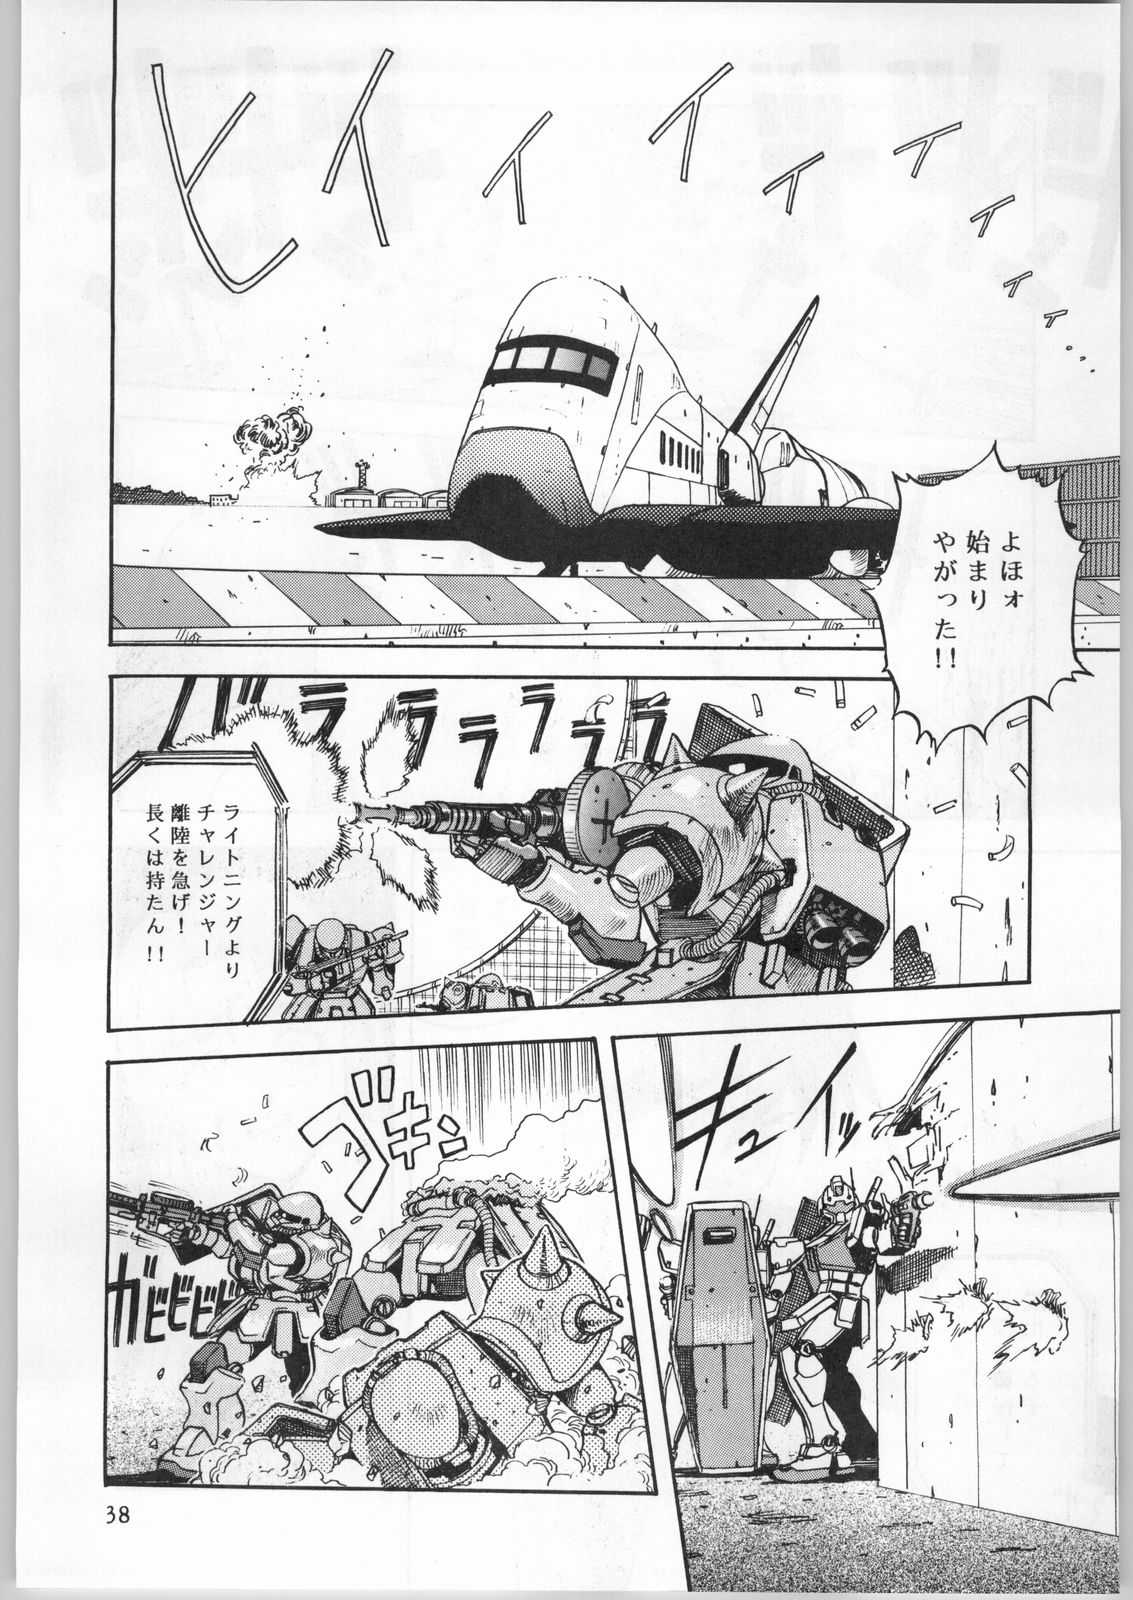 [Gundam] Crossing the Line Round Three (AXZ) 